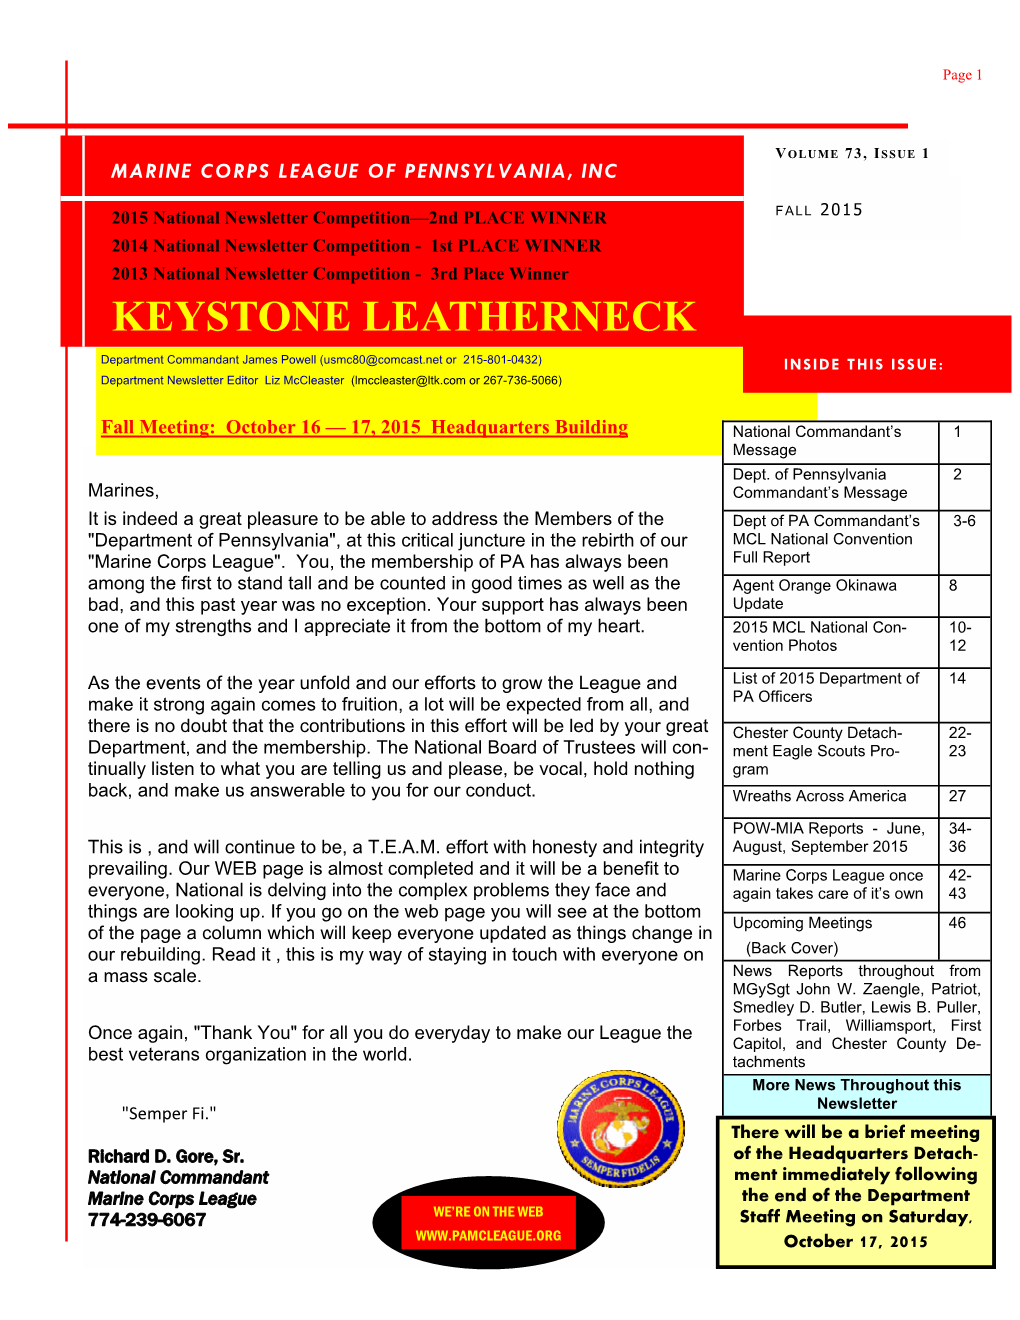 Keystone Leatherneck